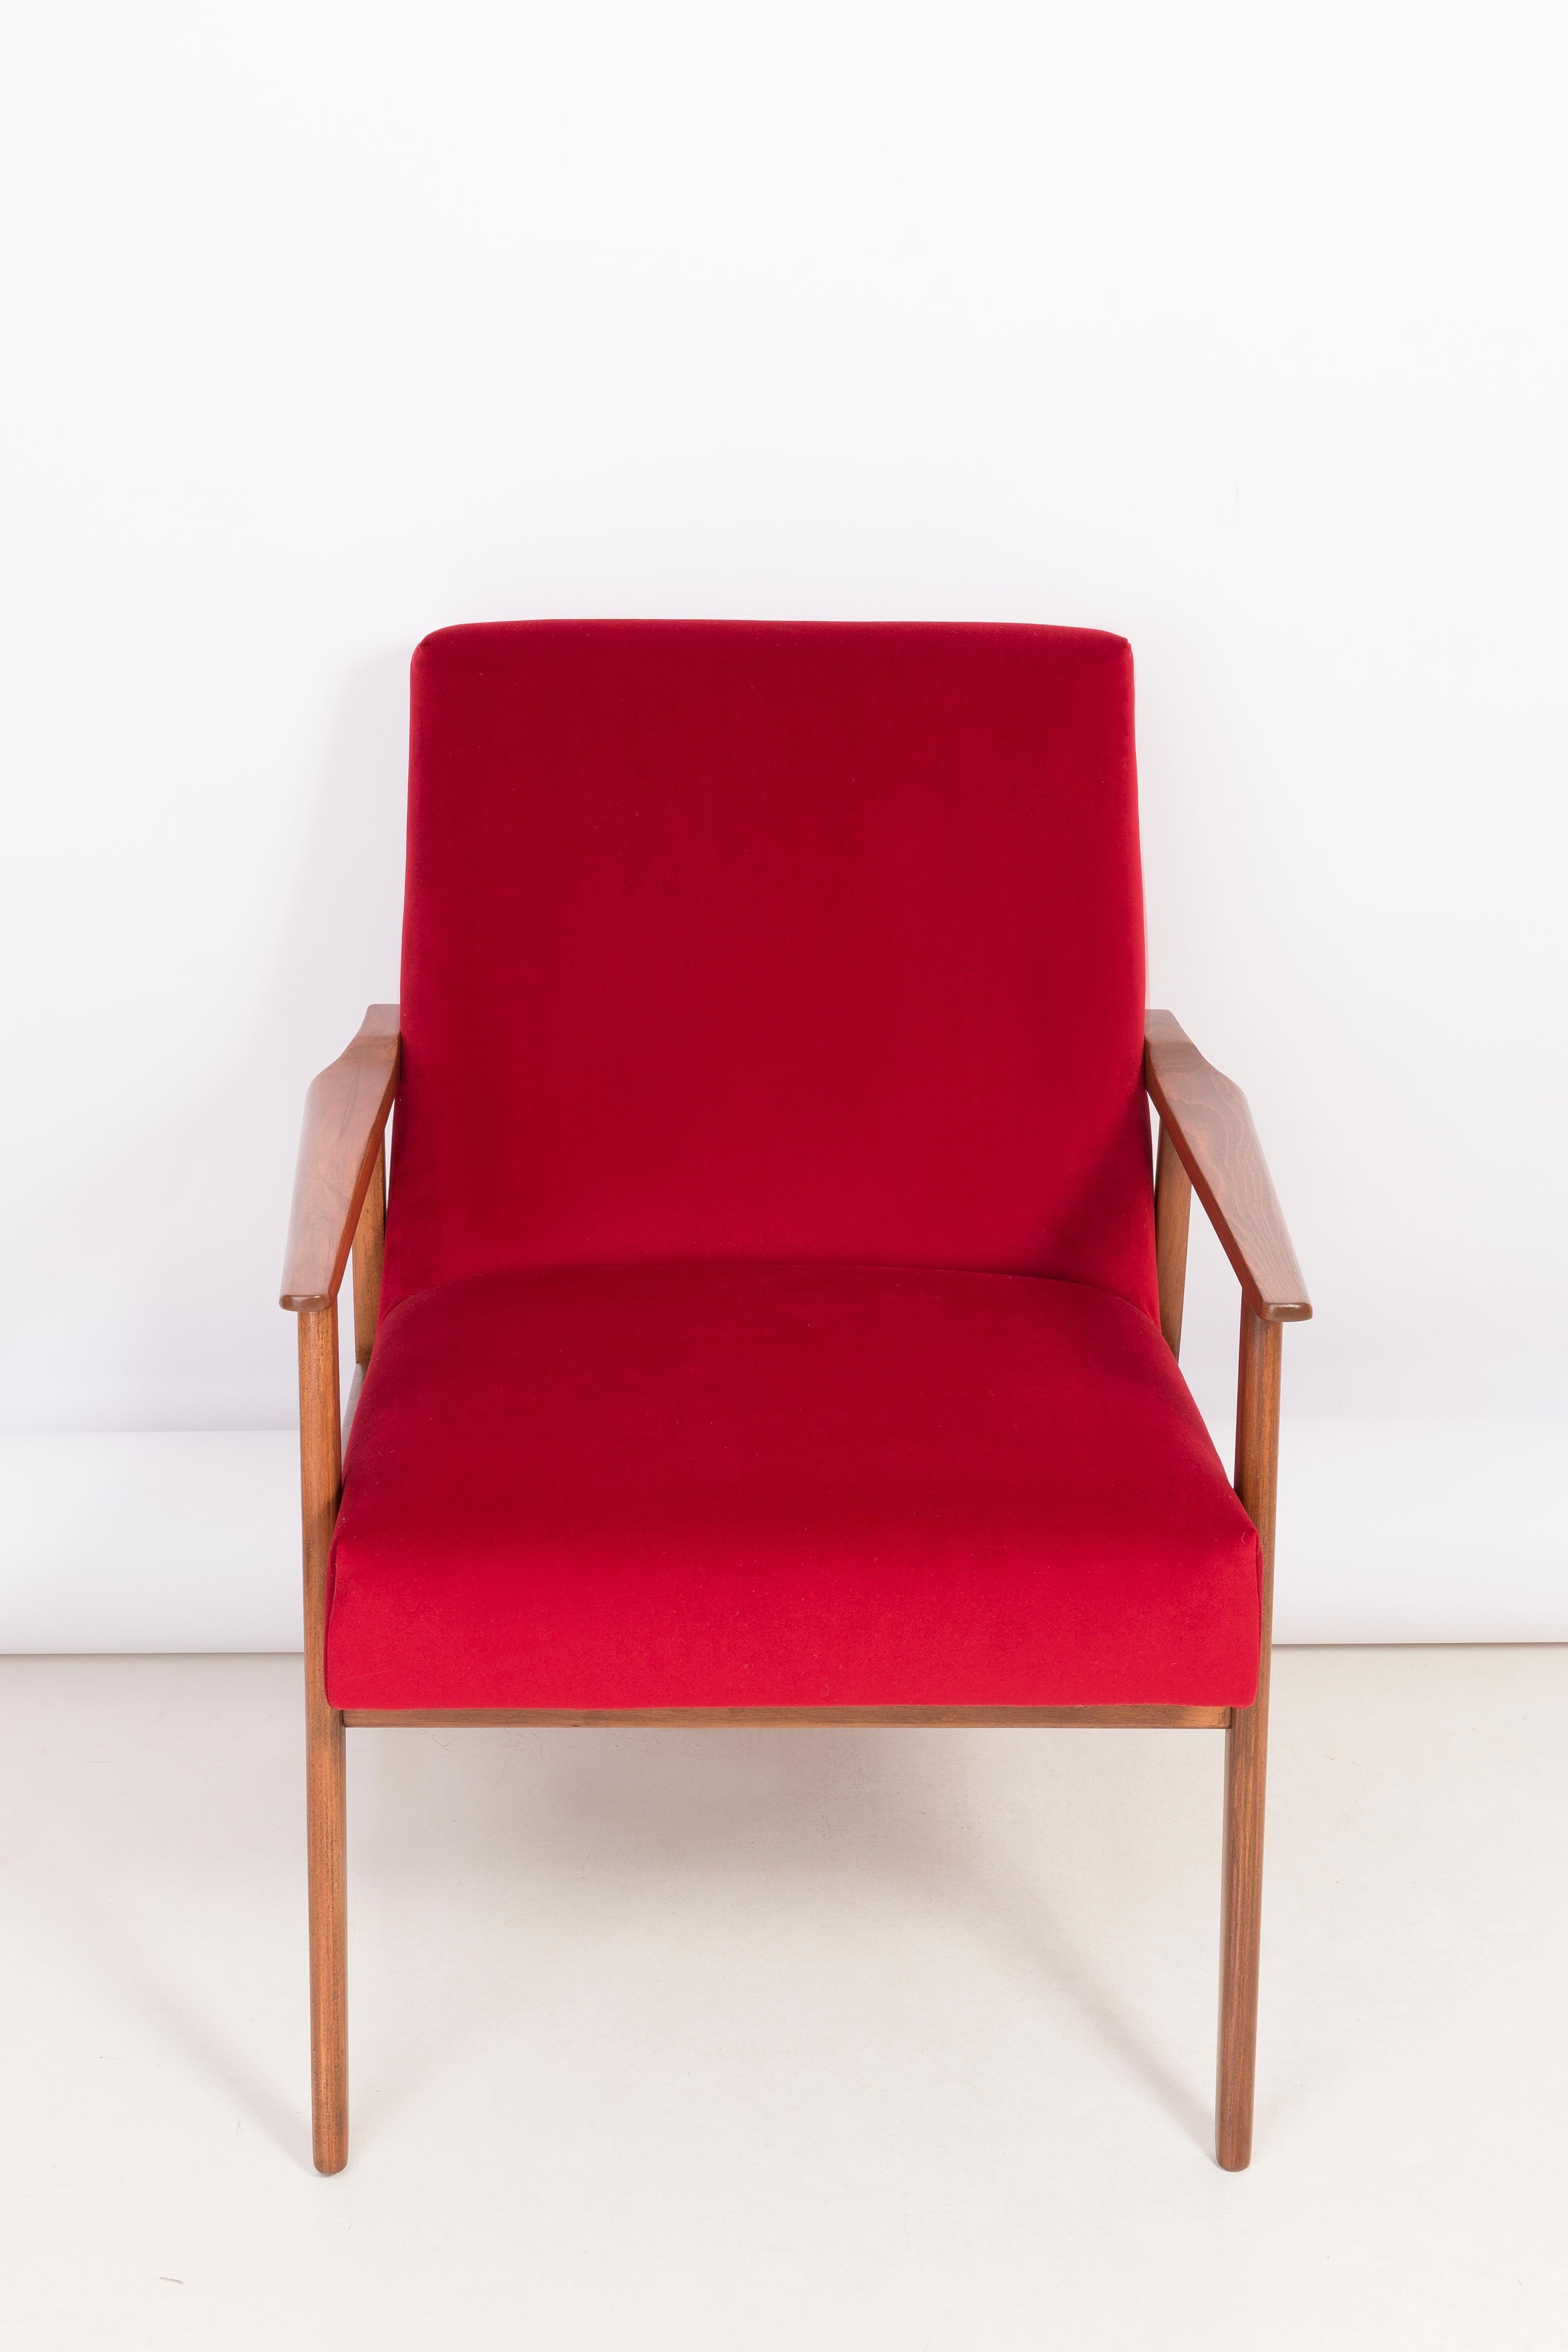 red mid century modern chair